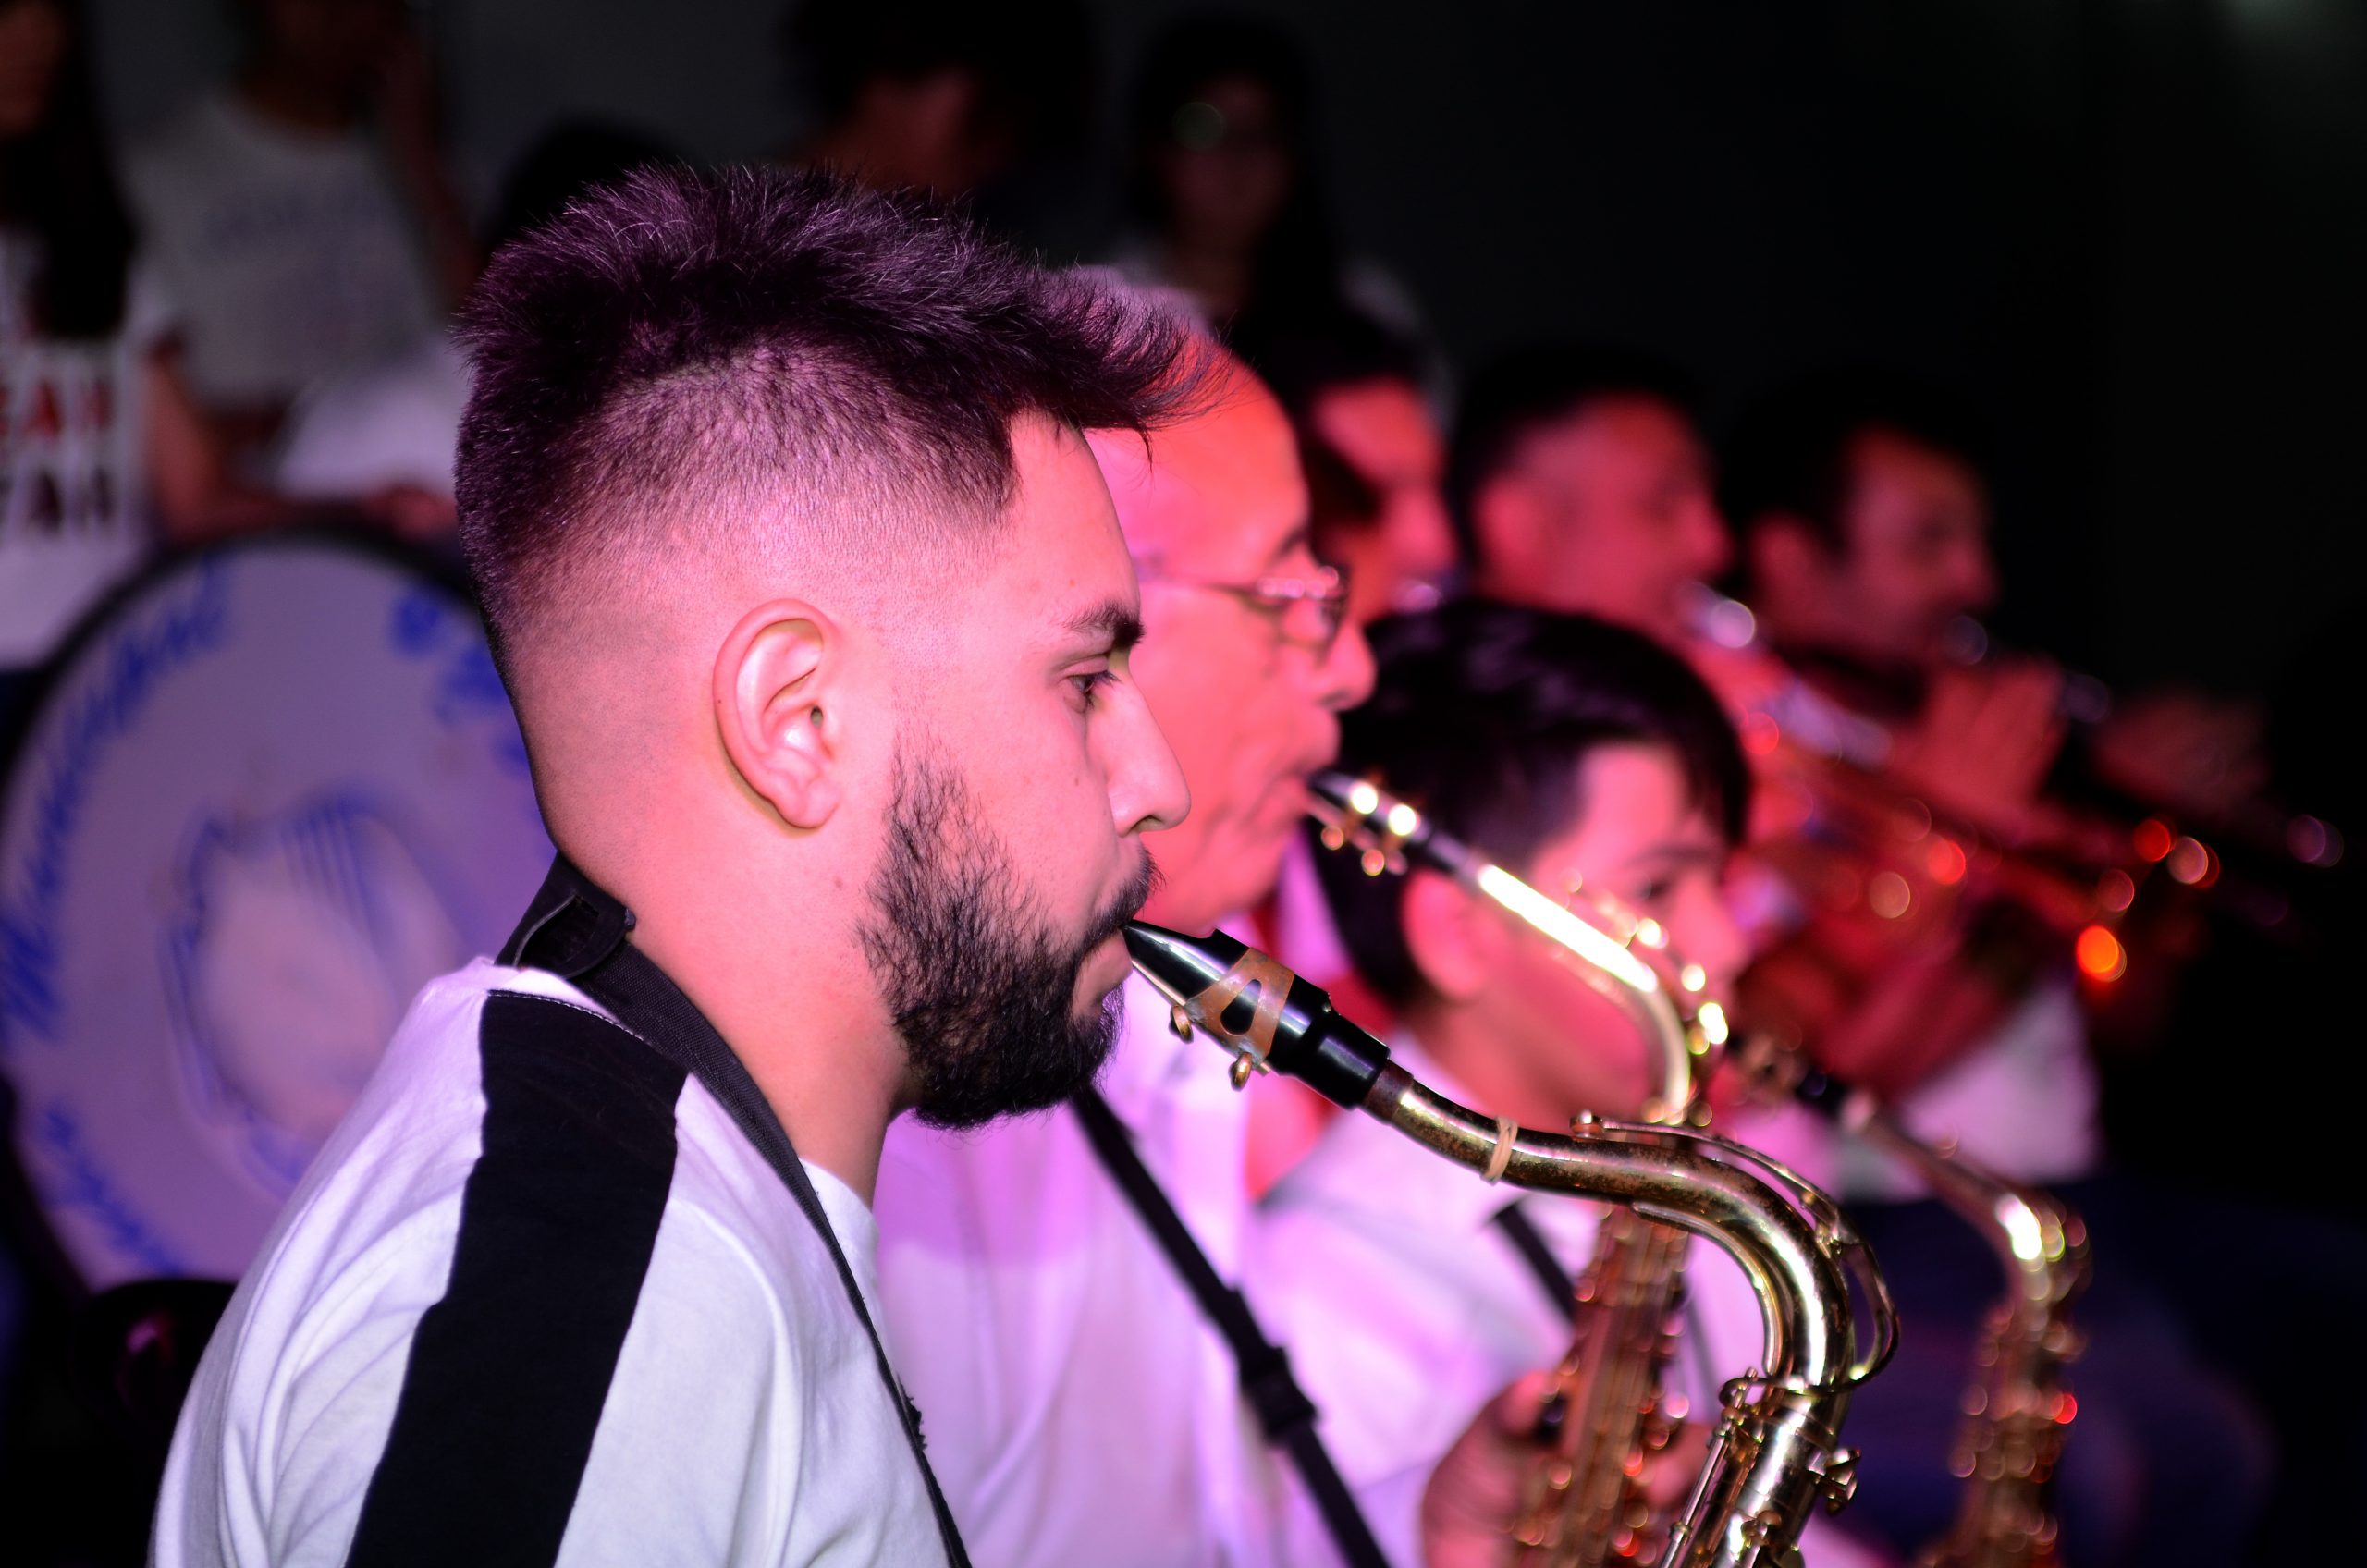 Escuela de Música banda municipal